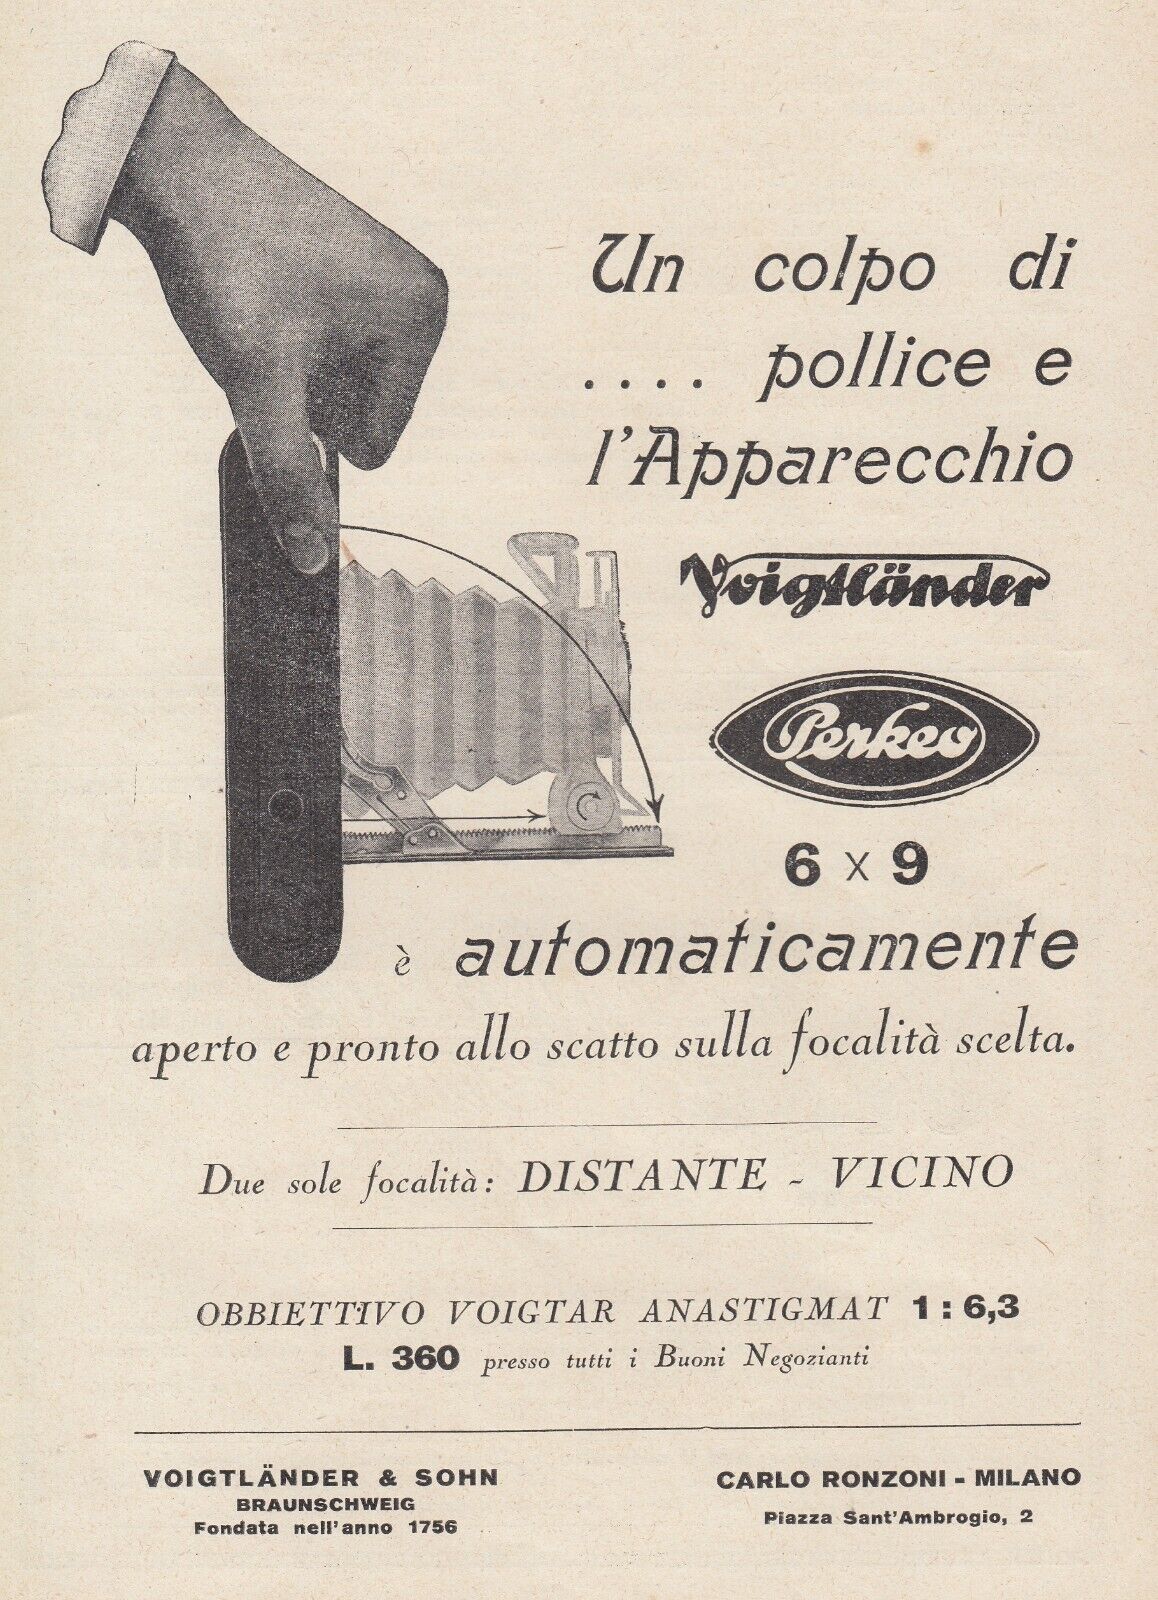 Y1658 Massager Photographic Voigtlander Perkeo, Advertising 1929, Advertising